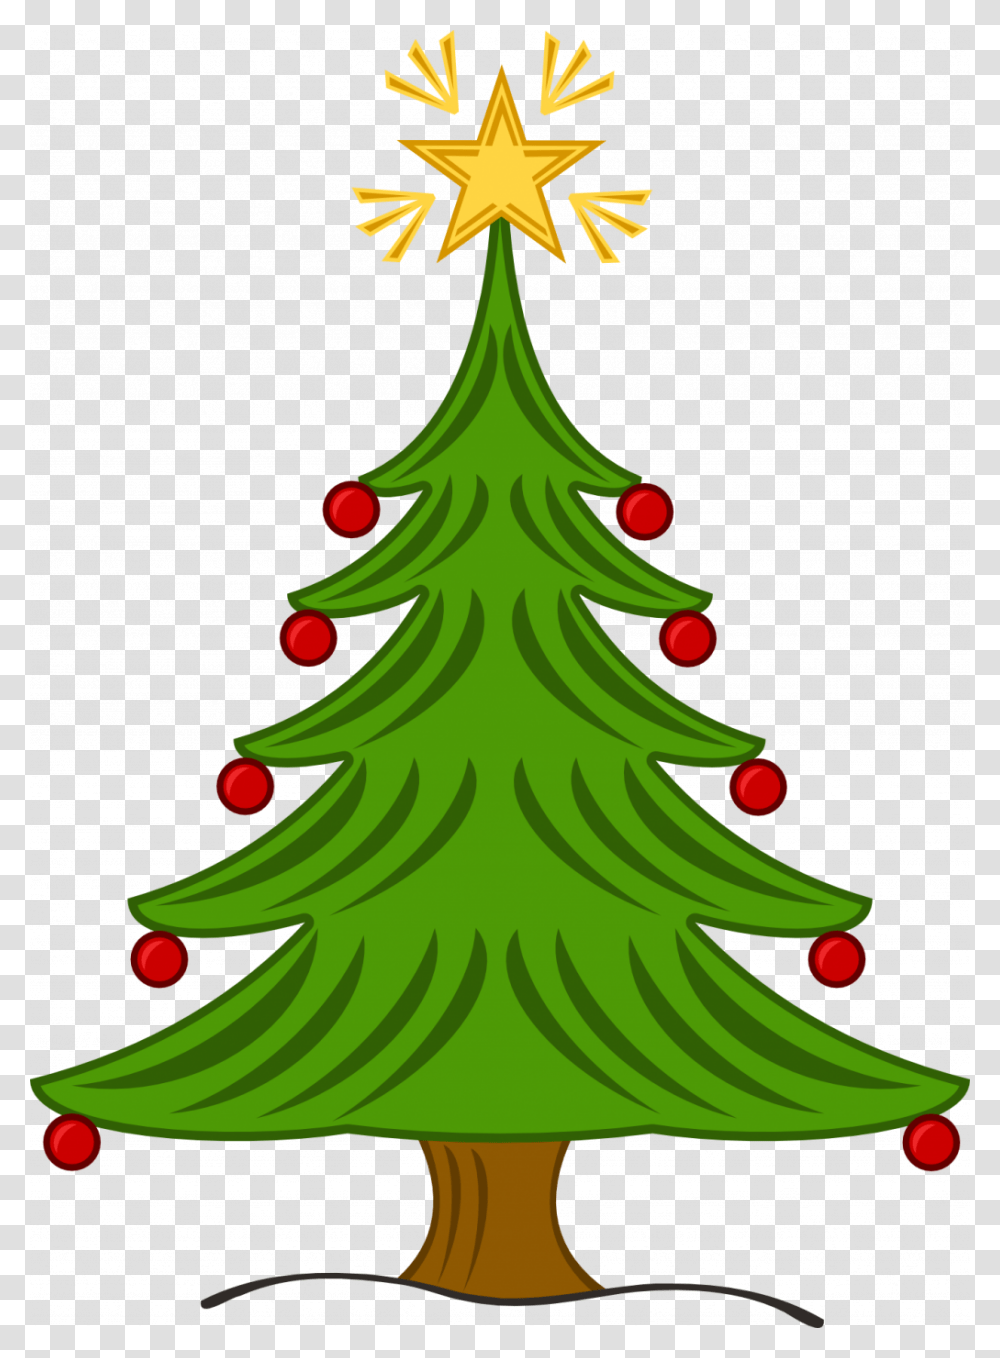 Christmas Tree Excelent Art Christmas Tree Craft Clipart Vintage, Plant, Ornament, Star Symbol Transparent Png